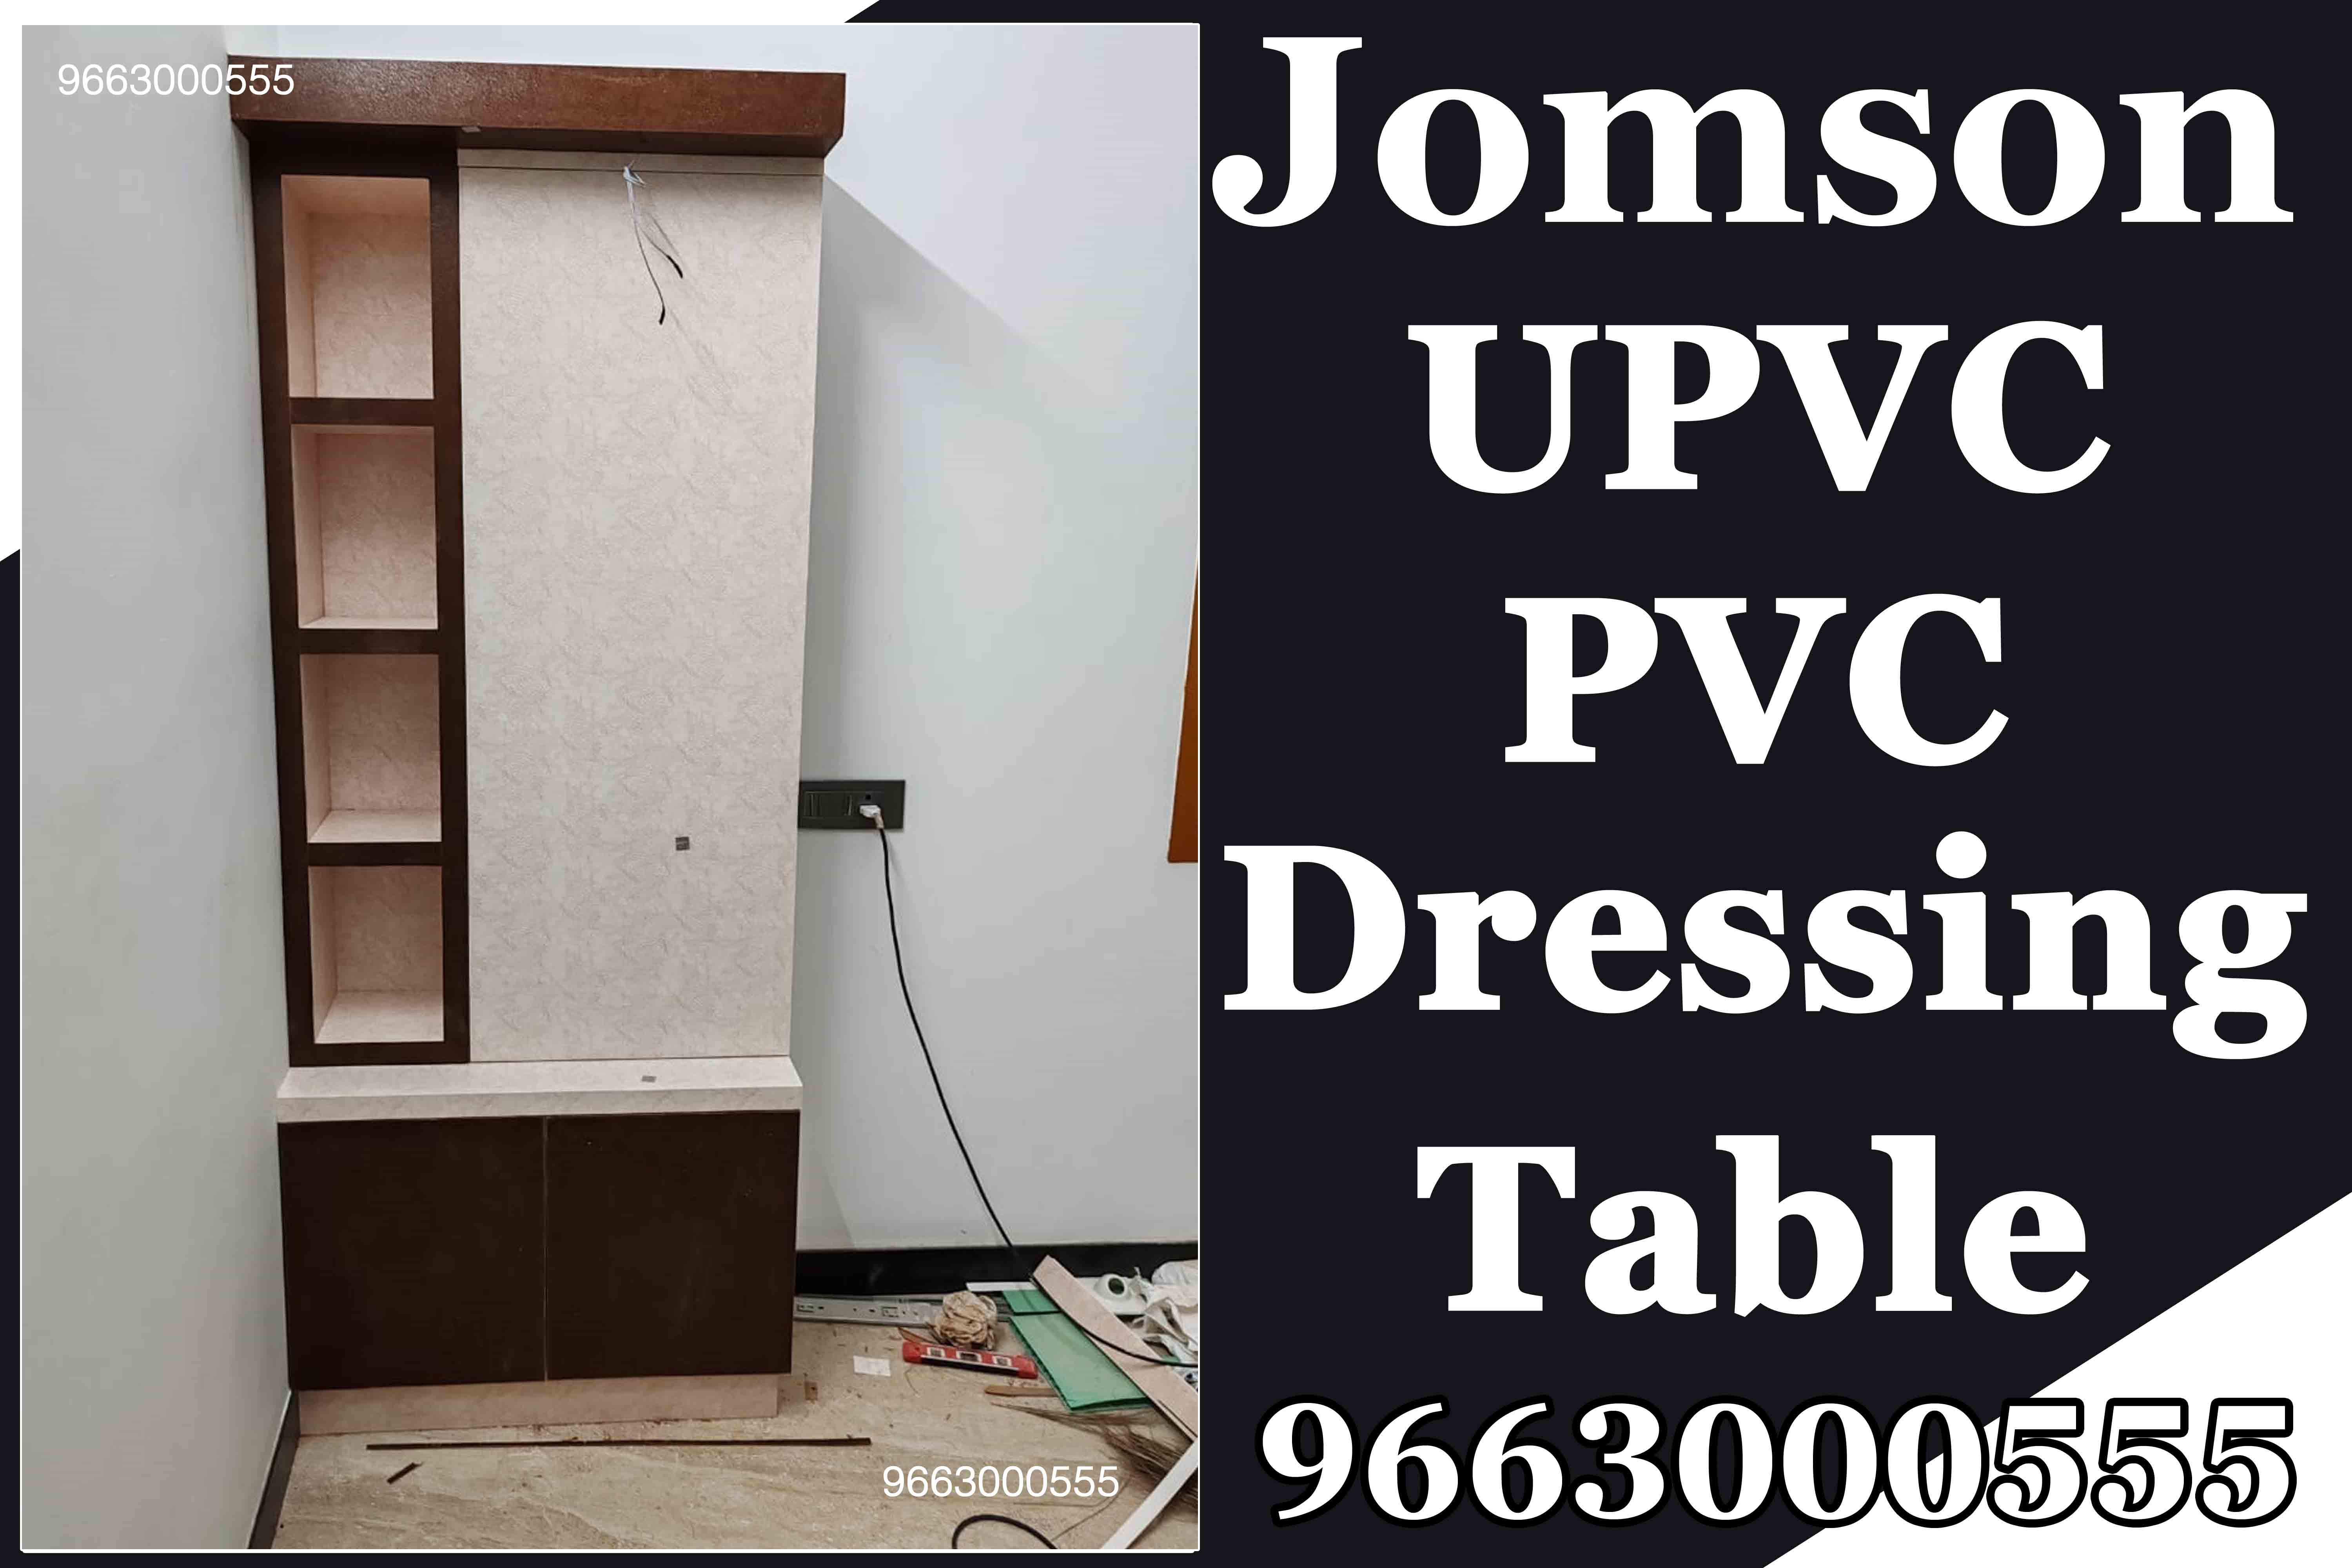 upvc dressing table price